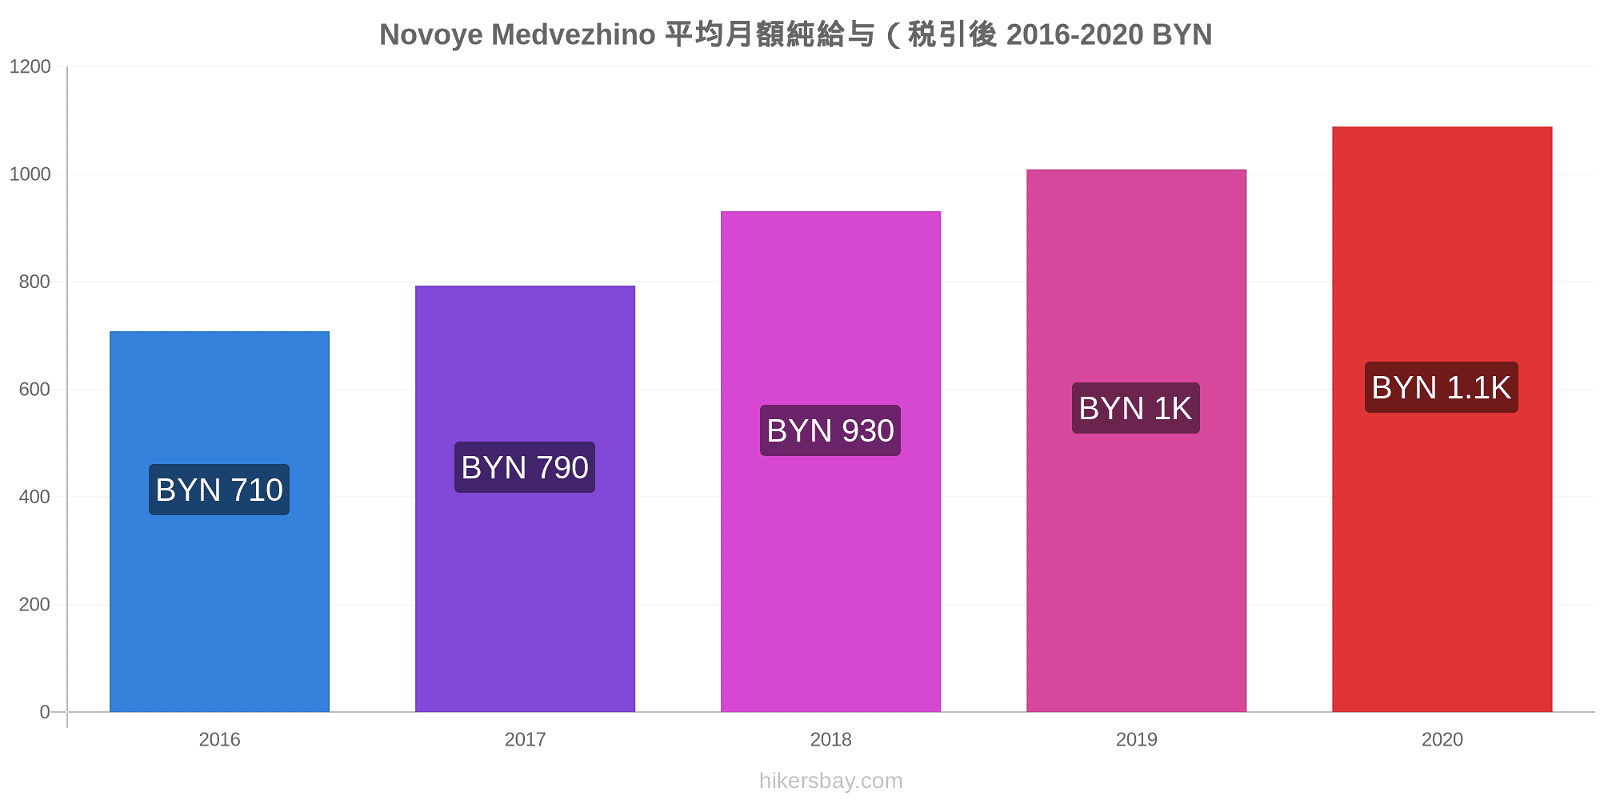 Novoye Medvezhino 価格変更 純平均月給 (税引後) hikersbay.com